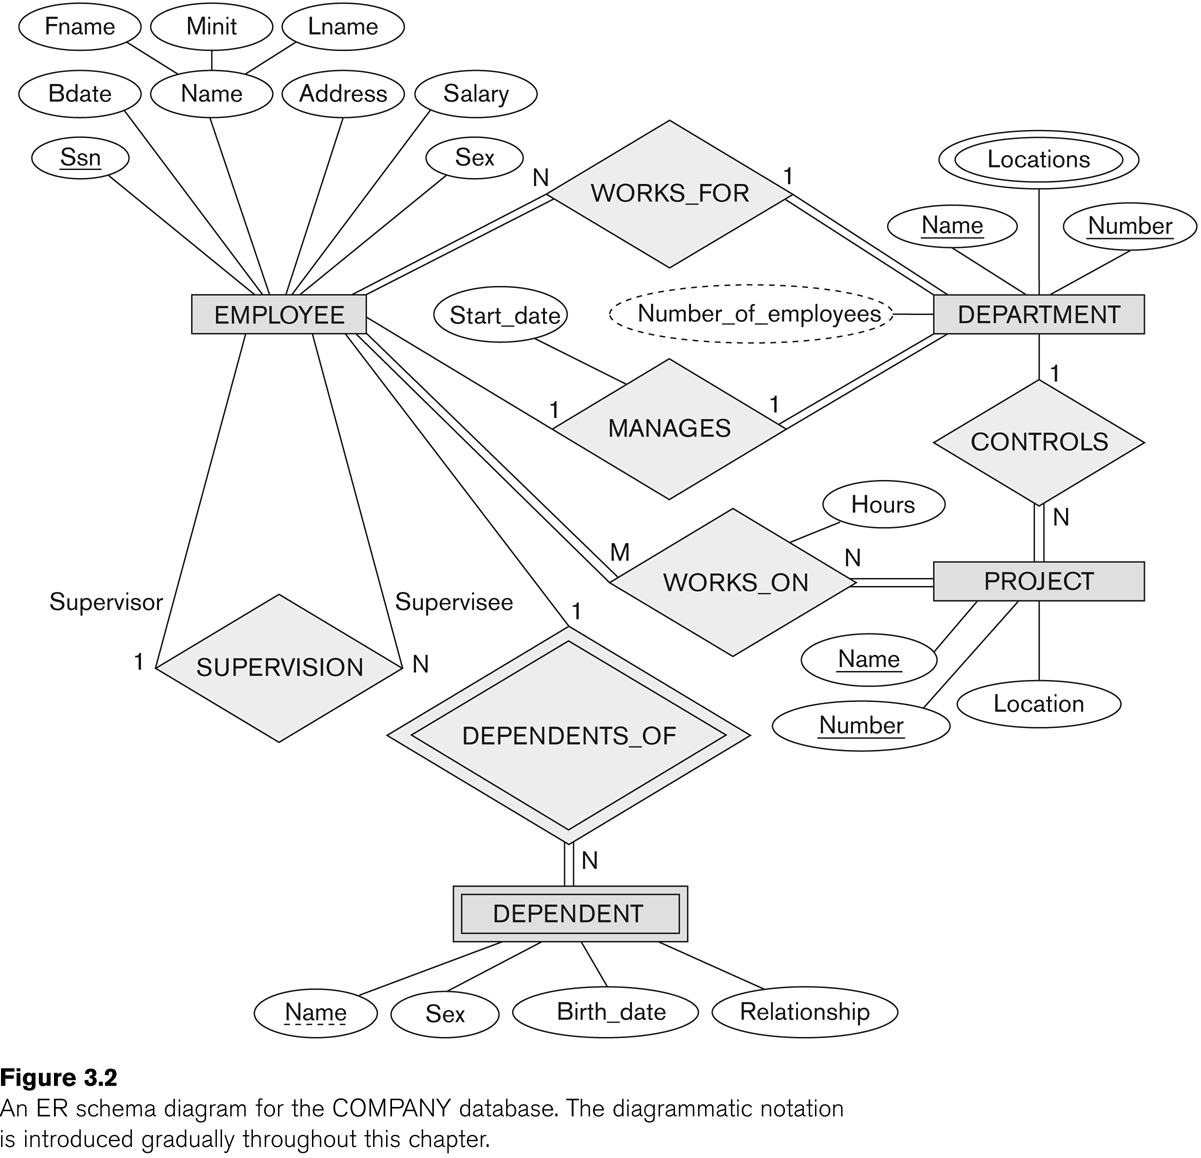 Entity-Relationship Modeling for Entity Relationship Data Model